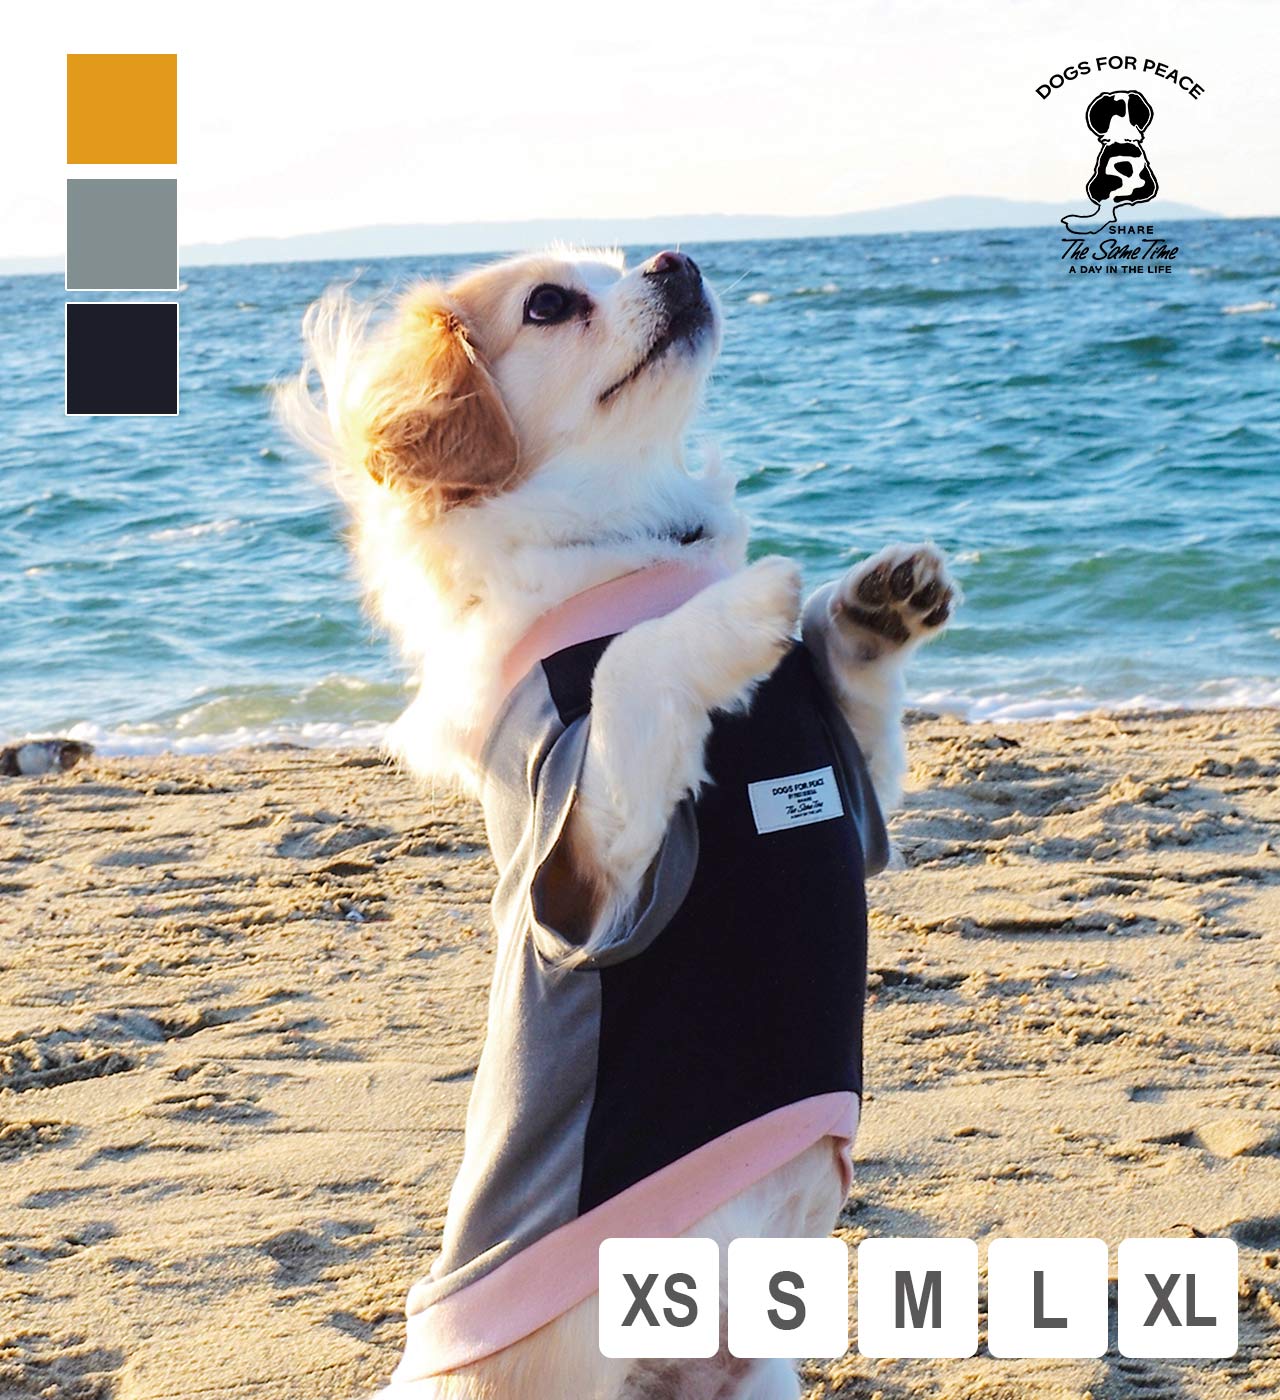 【DOGS】テックT-シャツ (5サイズ 3カラー) DOGS FOR PEACE / ドッグスフォーピース